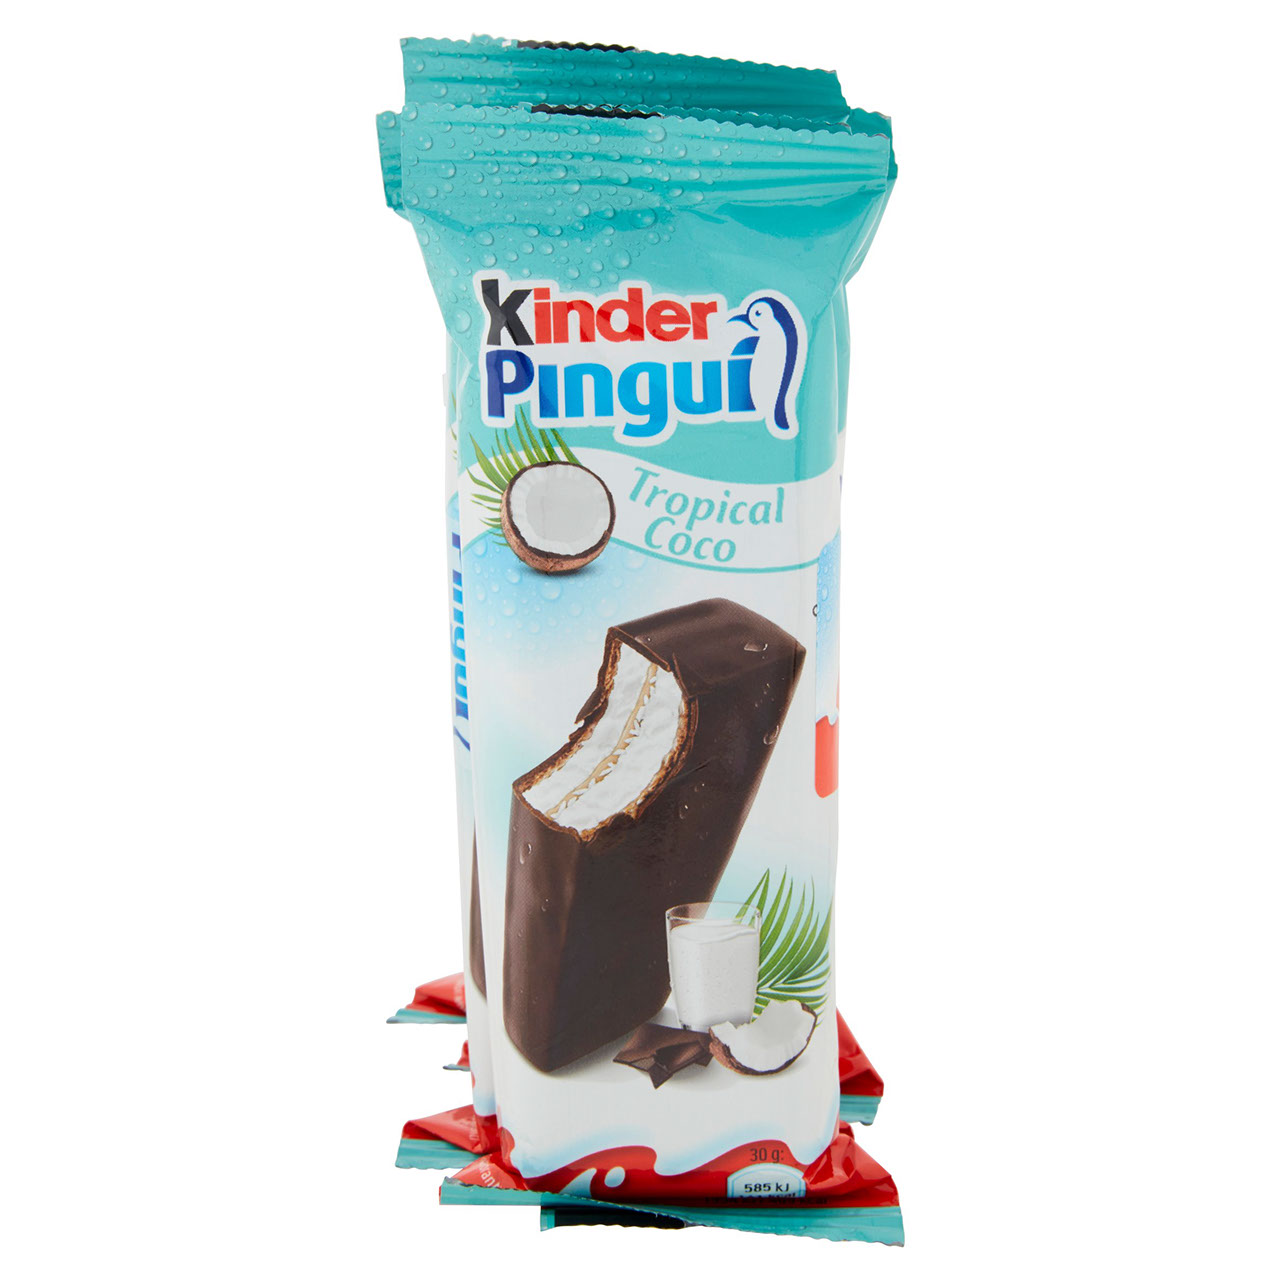 Kinder Pinguì Tropical Coco 4 x 30 g